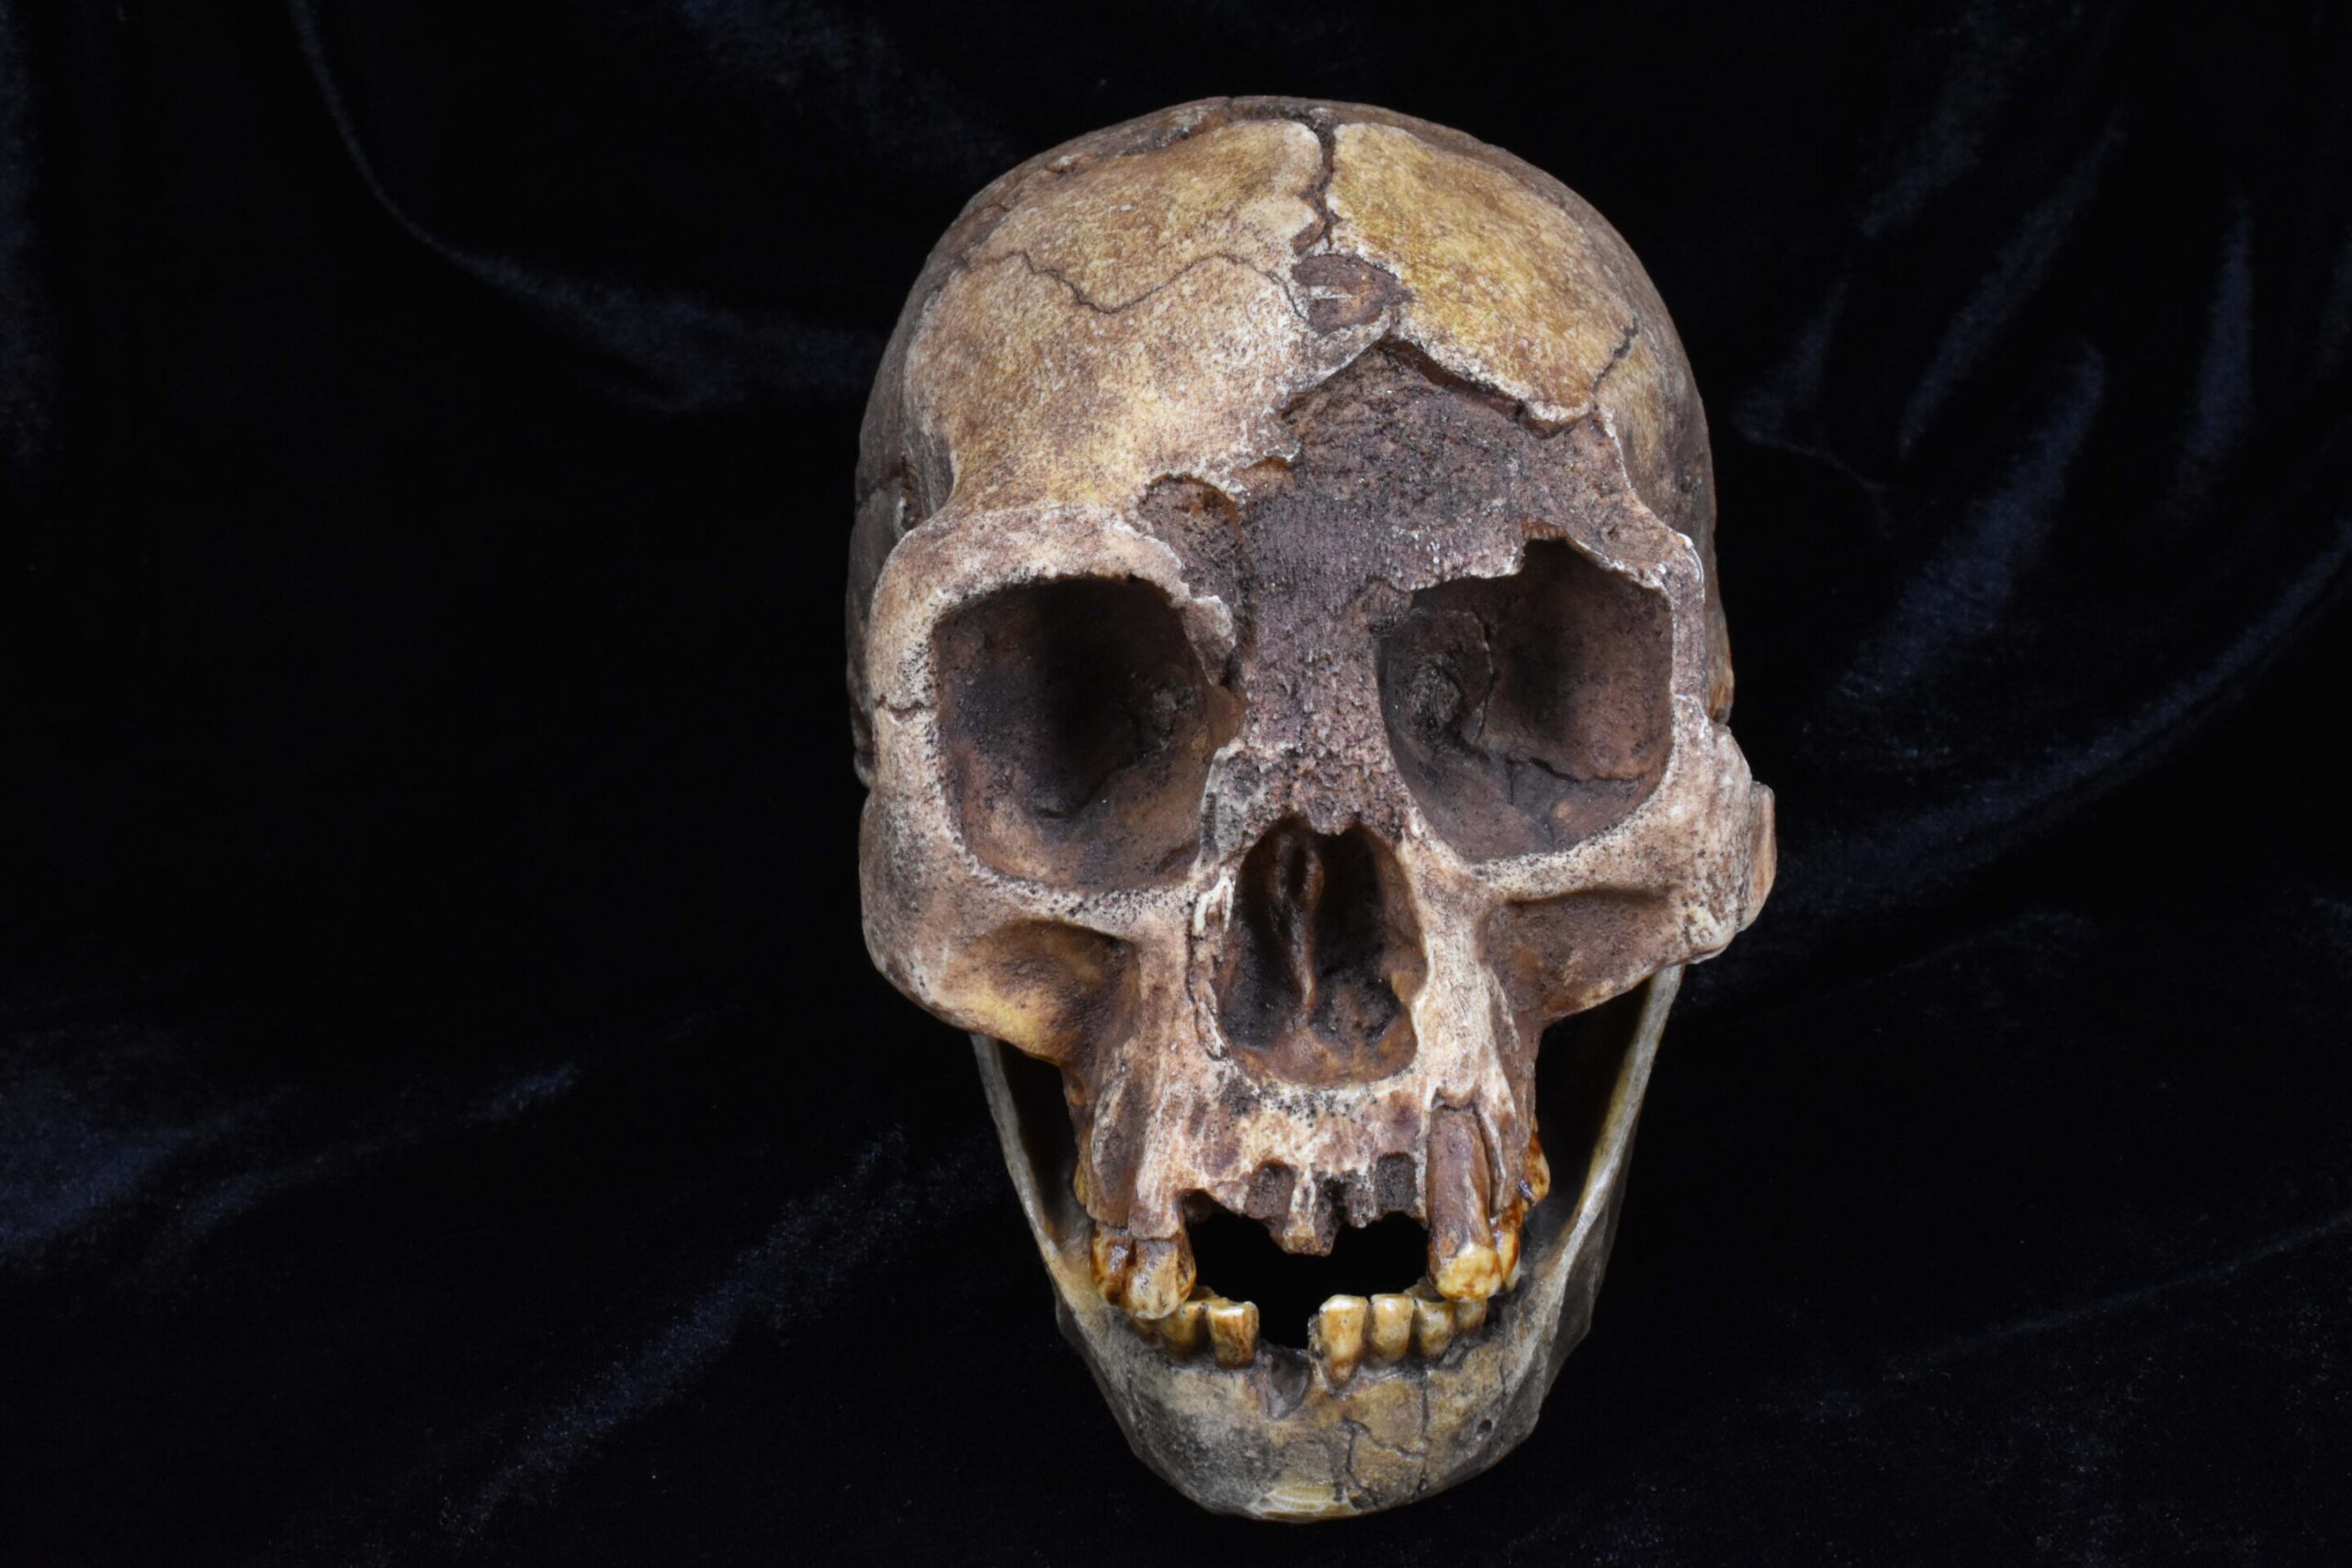 A skull cast of Homo floresiensis